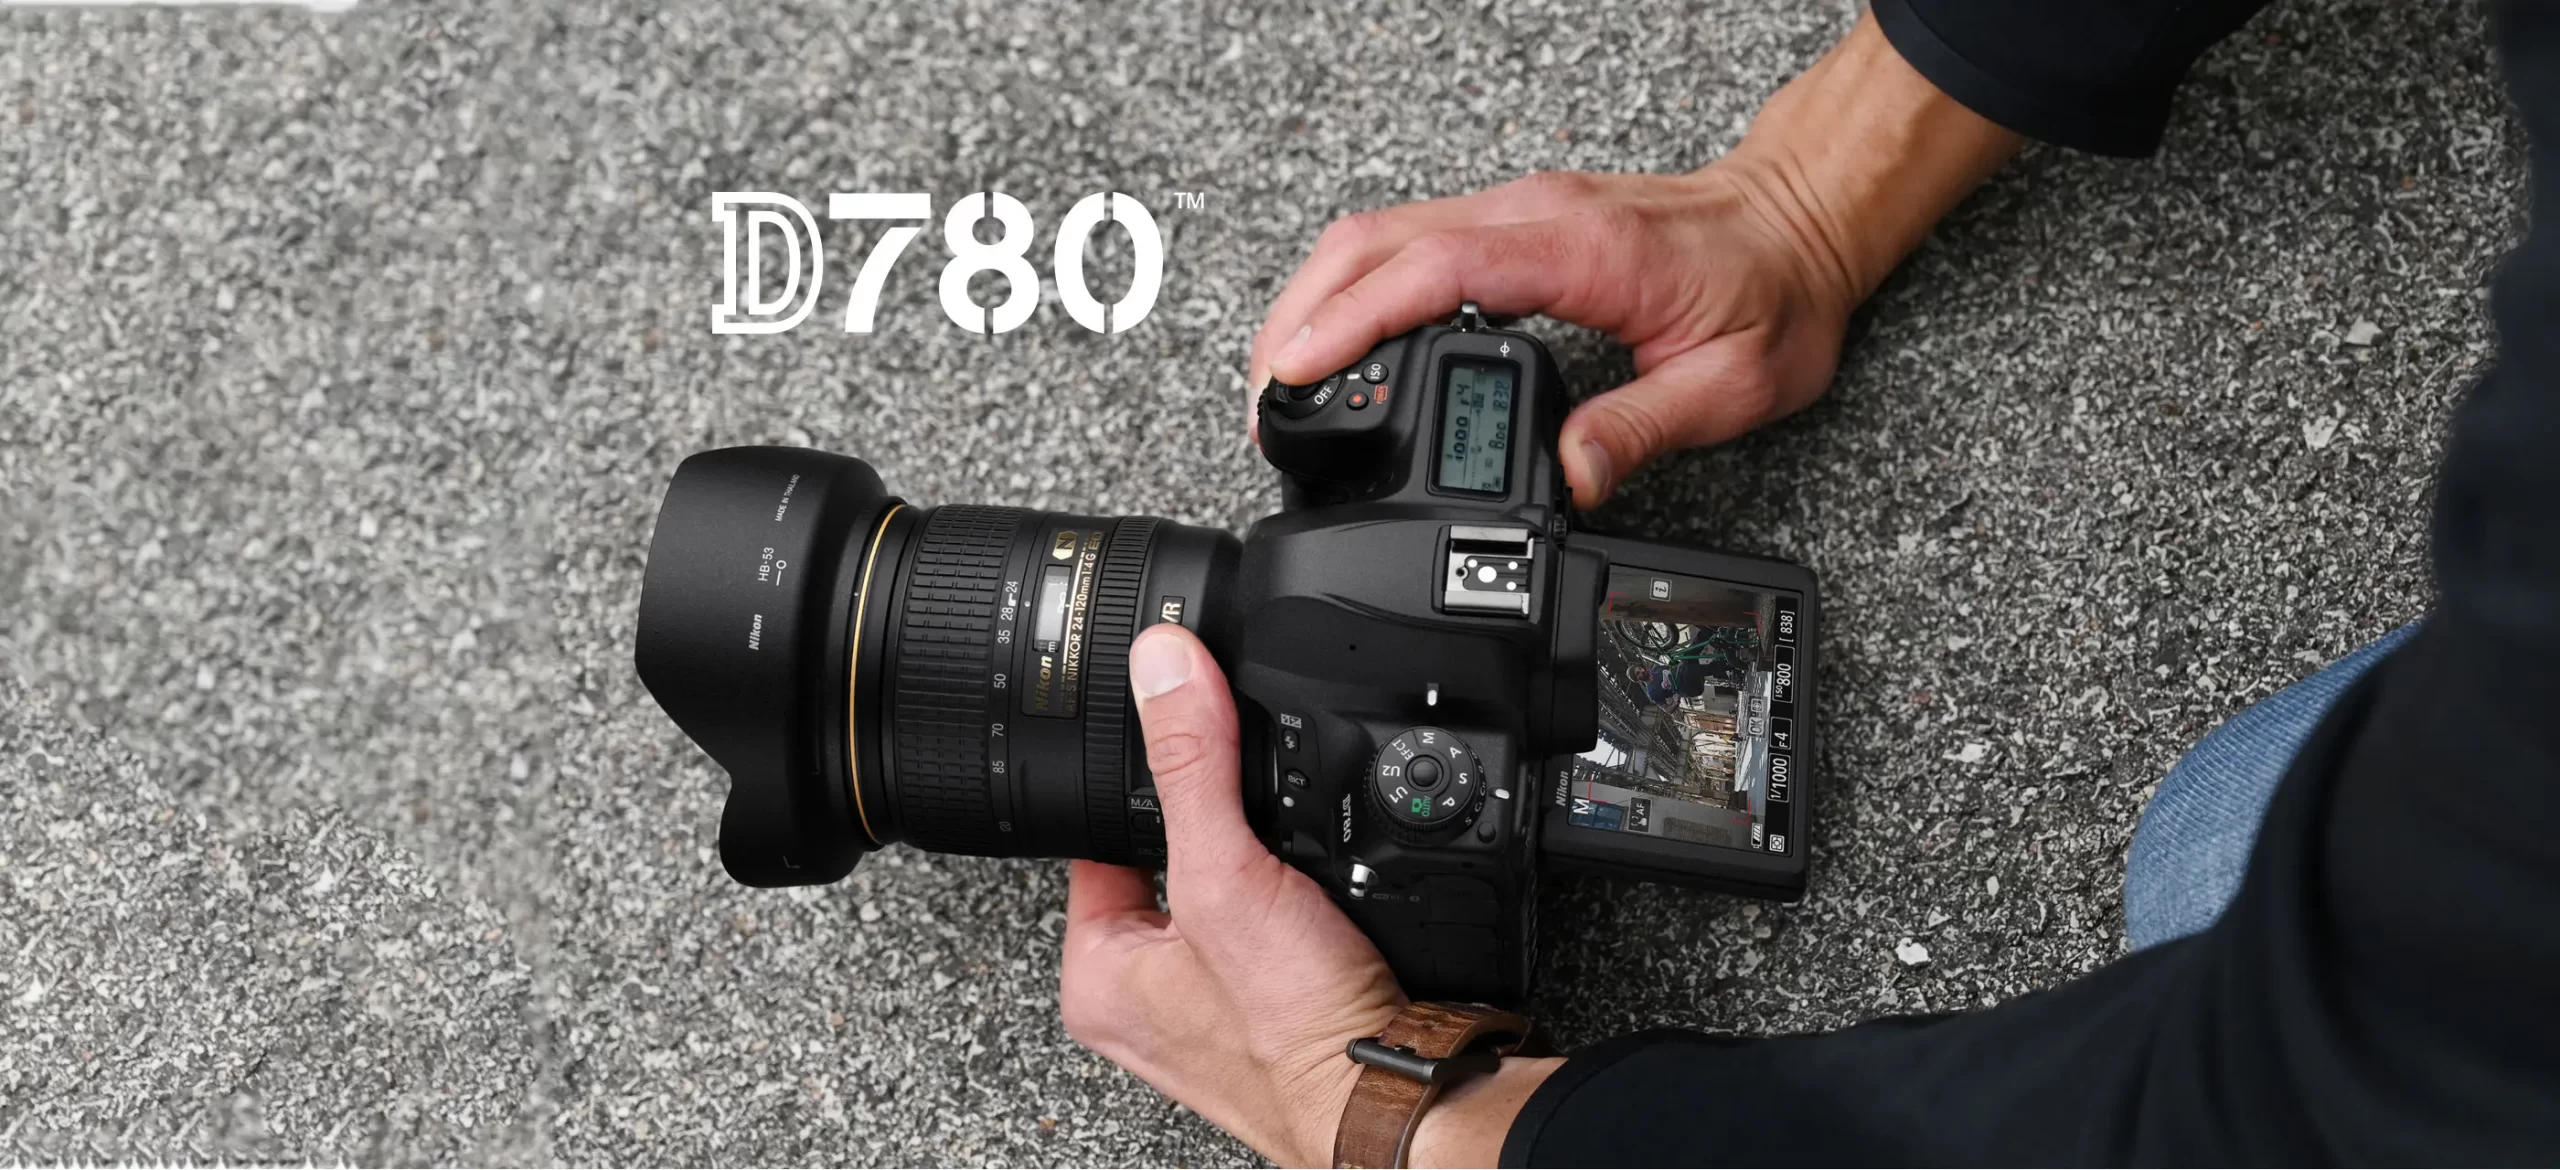 Nikon D780 camera image